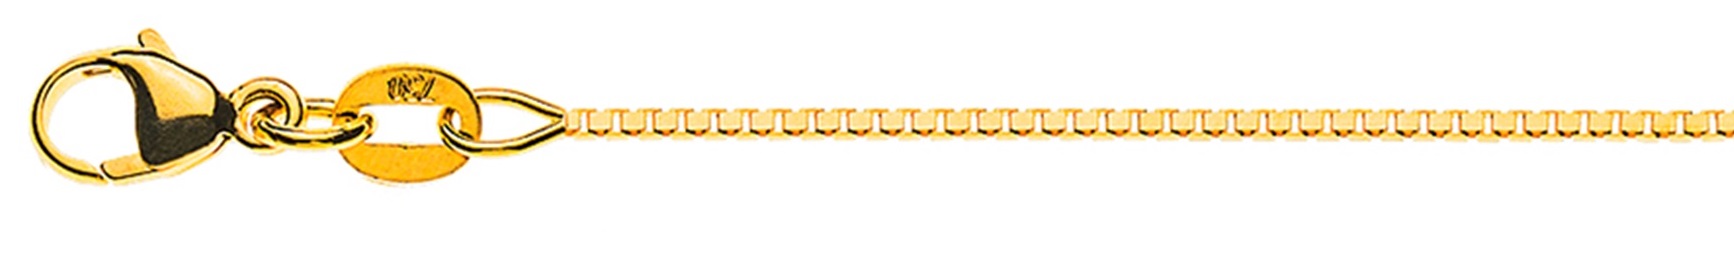 AURONOS Style Necklace yellow gold 9K Venetian chain diamond cut 55cm 0.9mm